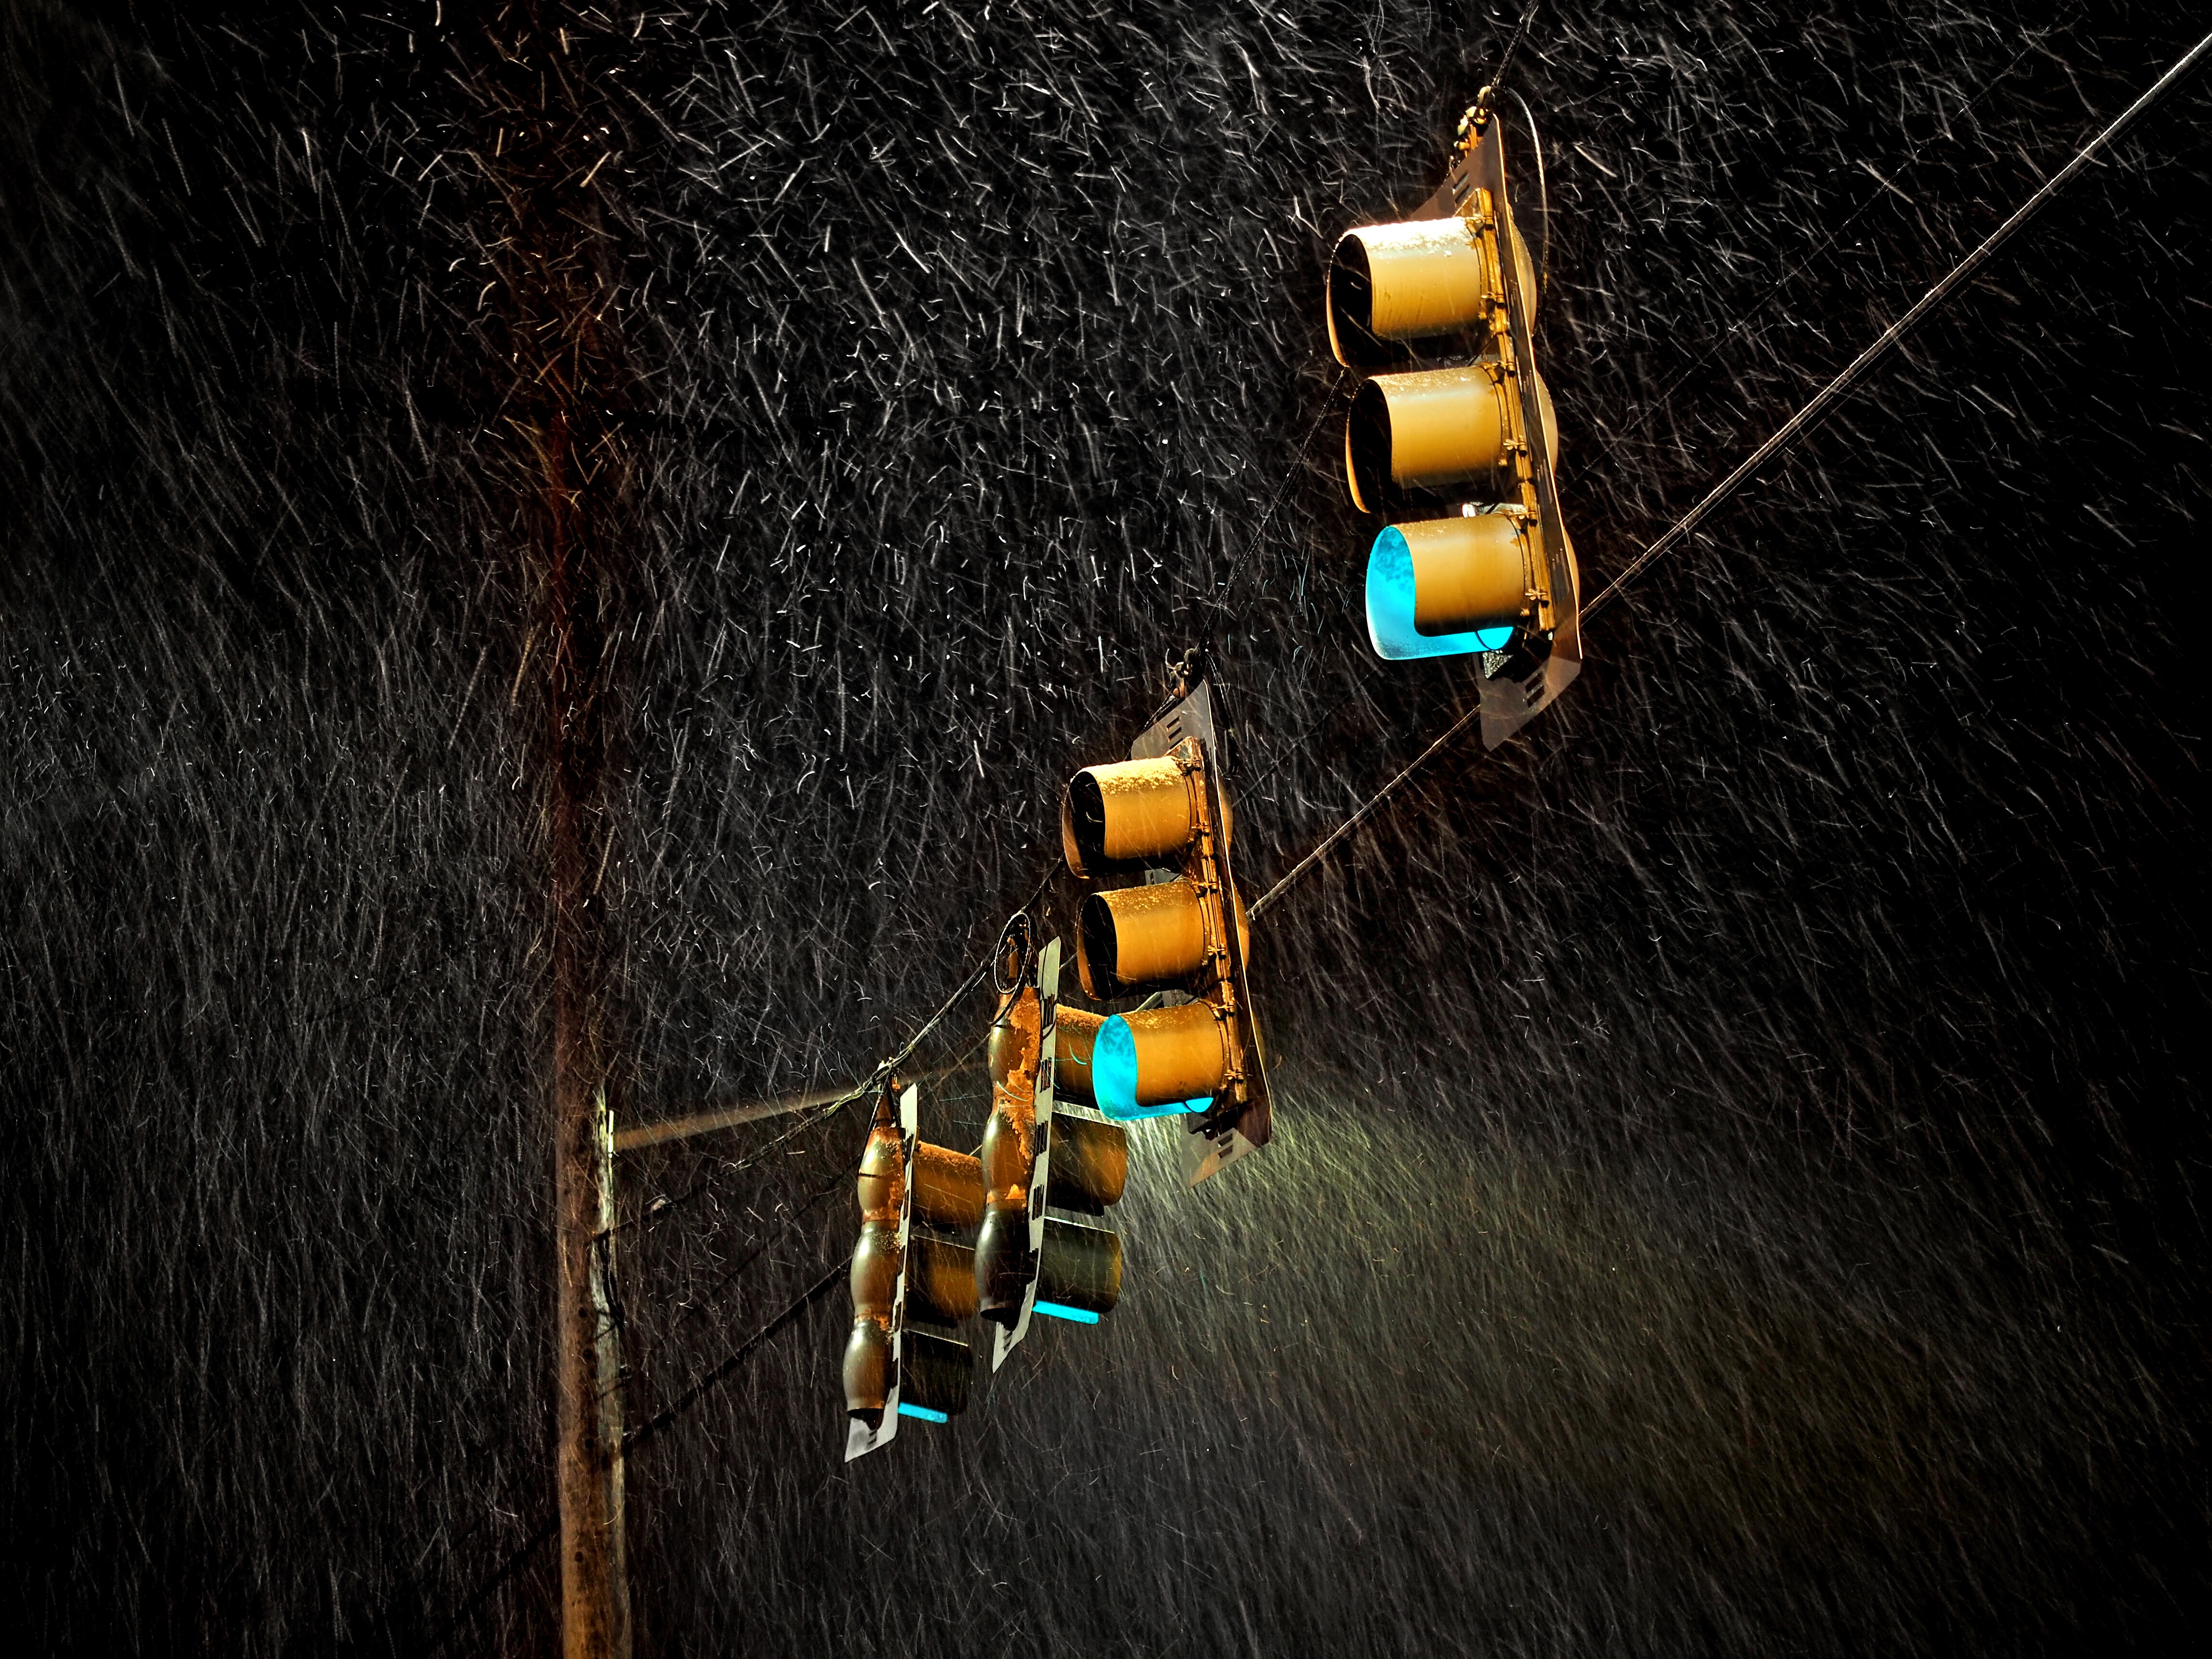 Four-traffic-lights-under-the-rain.jpg